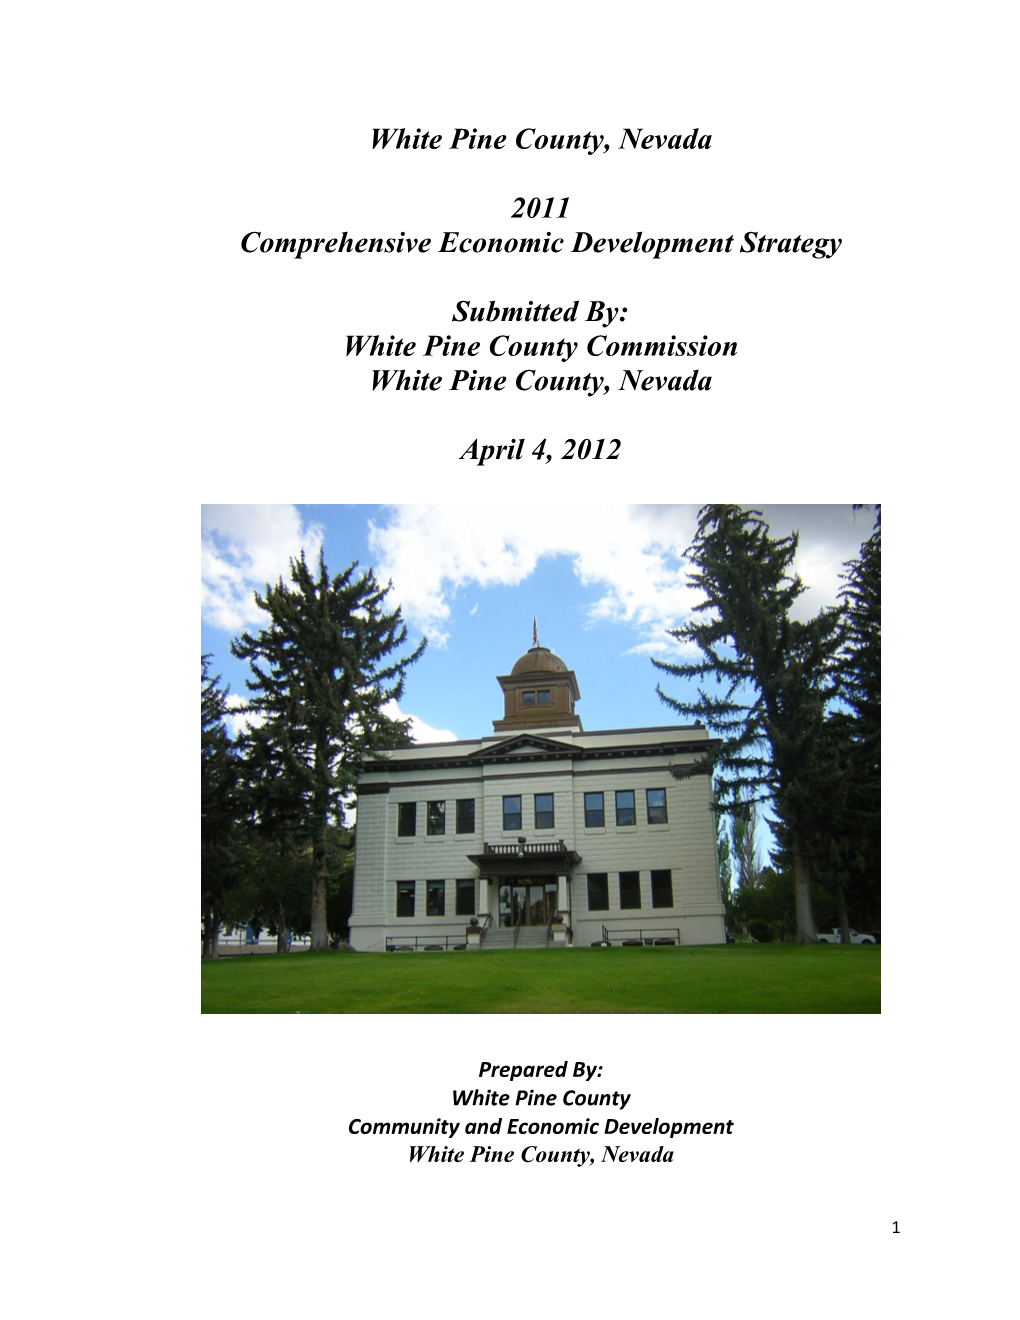 White Pine County, Nevada 2011 Comprehensive Economic Development Strategy